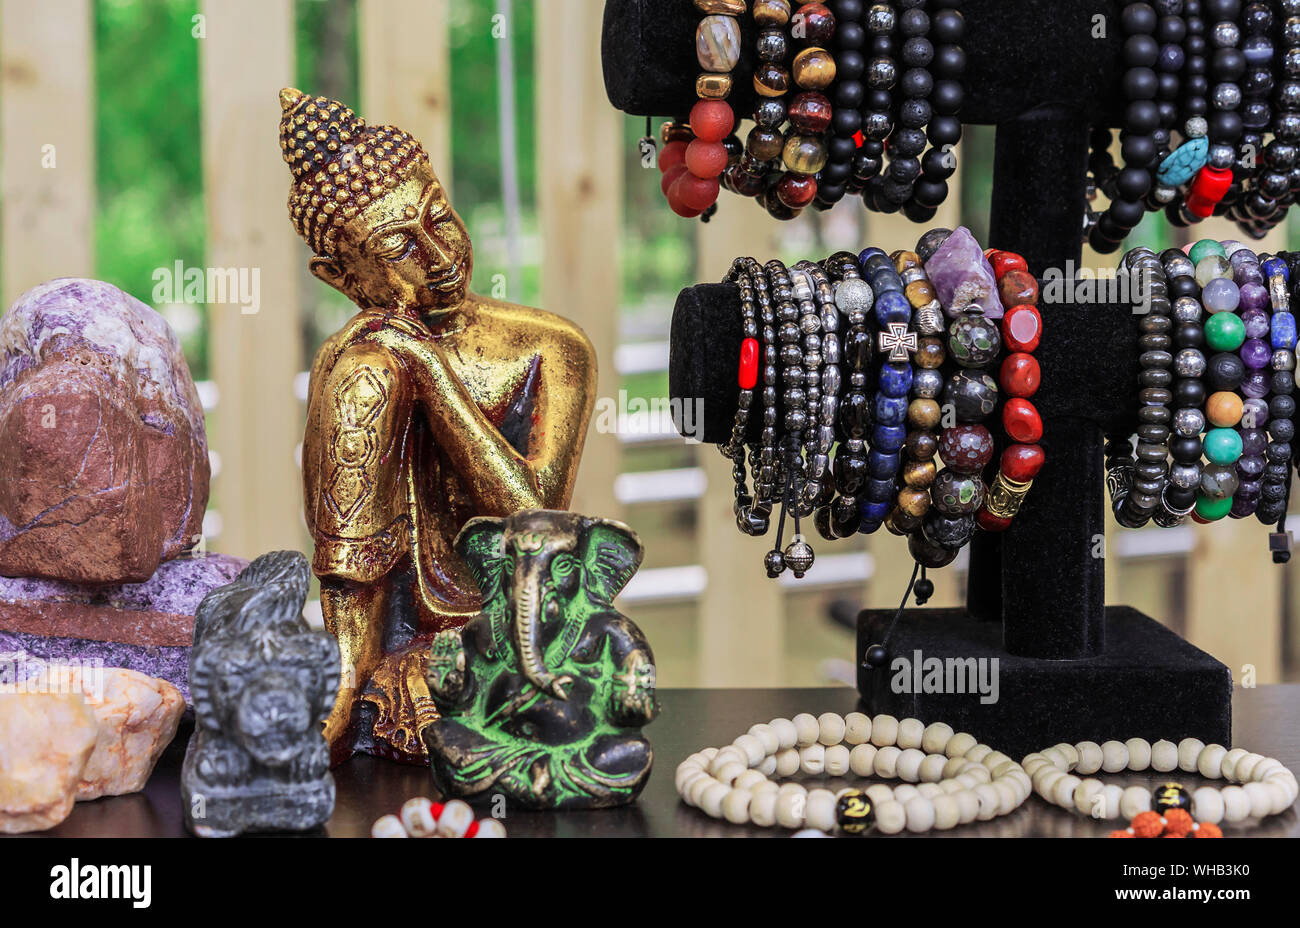 Buddha statuette in a street souvenir shop. Indian souvenir statuettes and handicrafts. Stock Photo